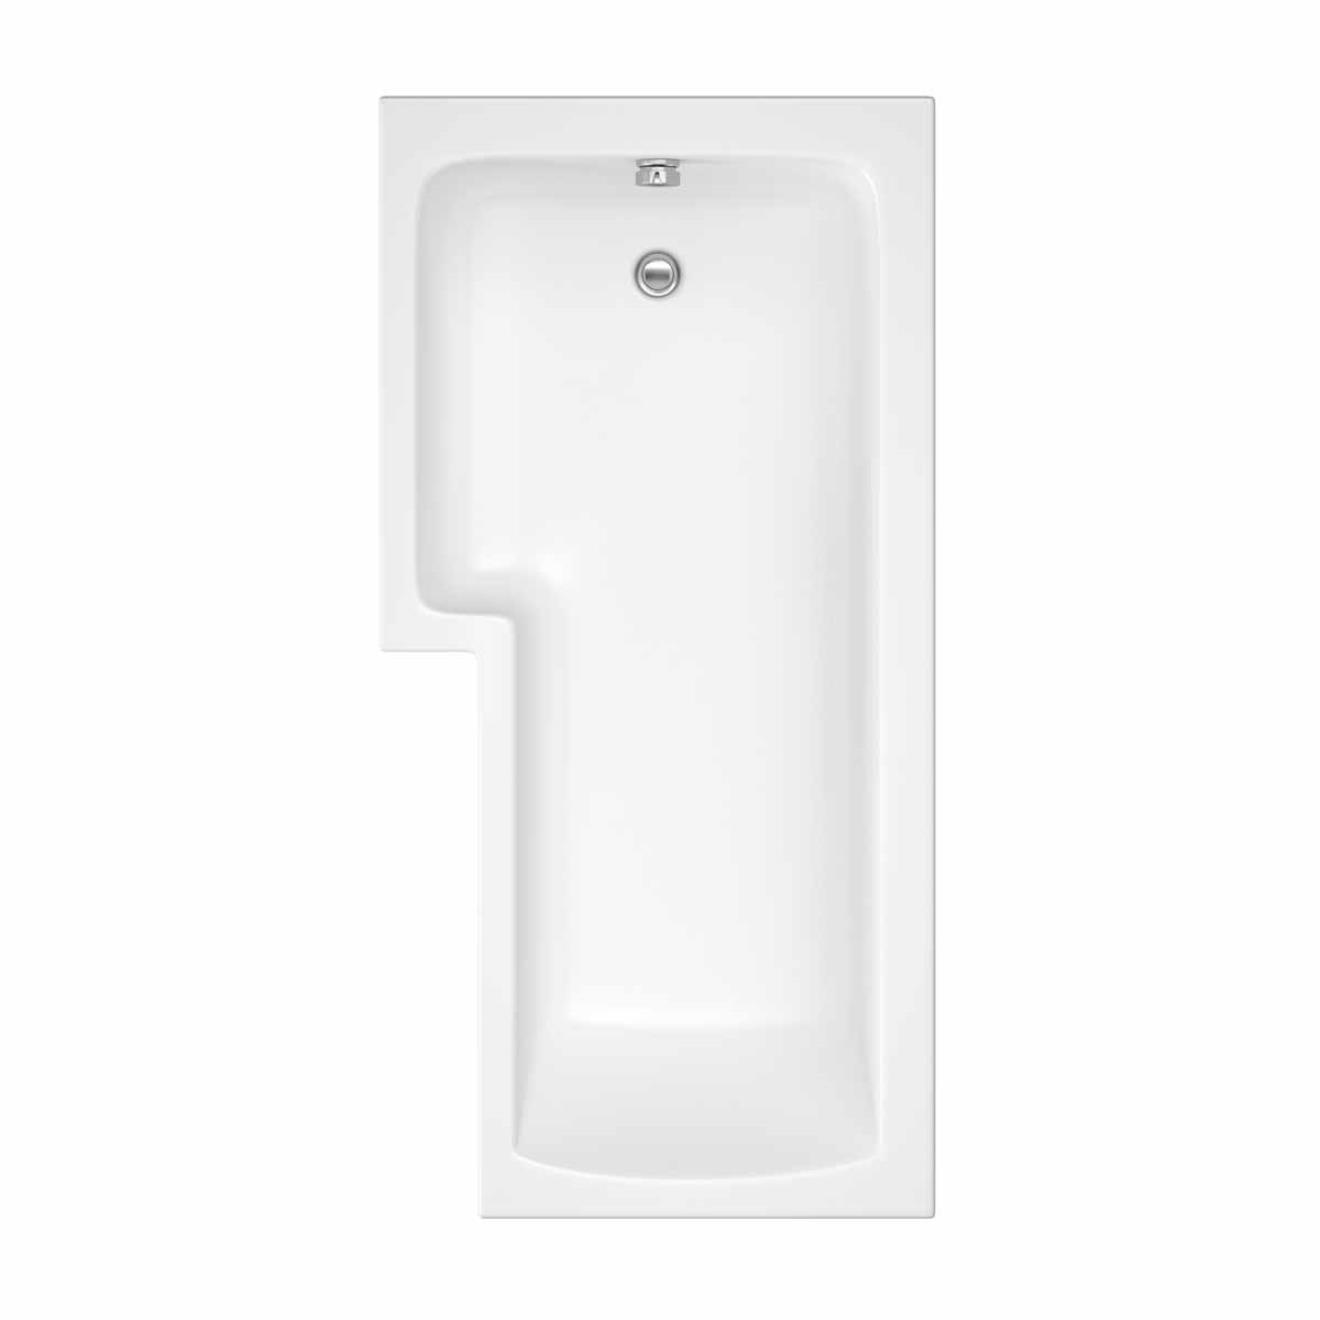 Solarna Trojancast L Shape Shower Bath 1500 x 850 x 700mm Left Hand